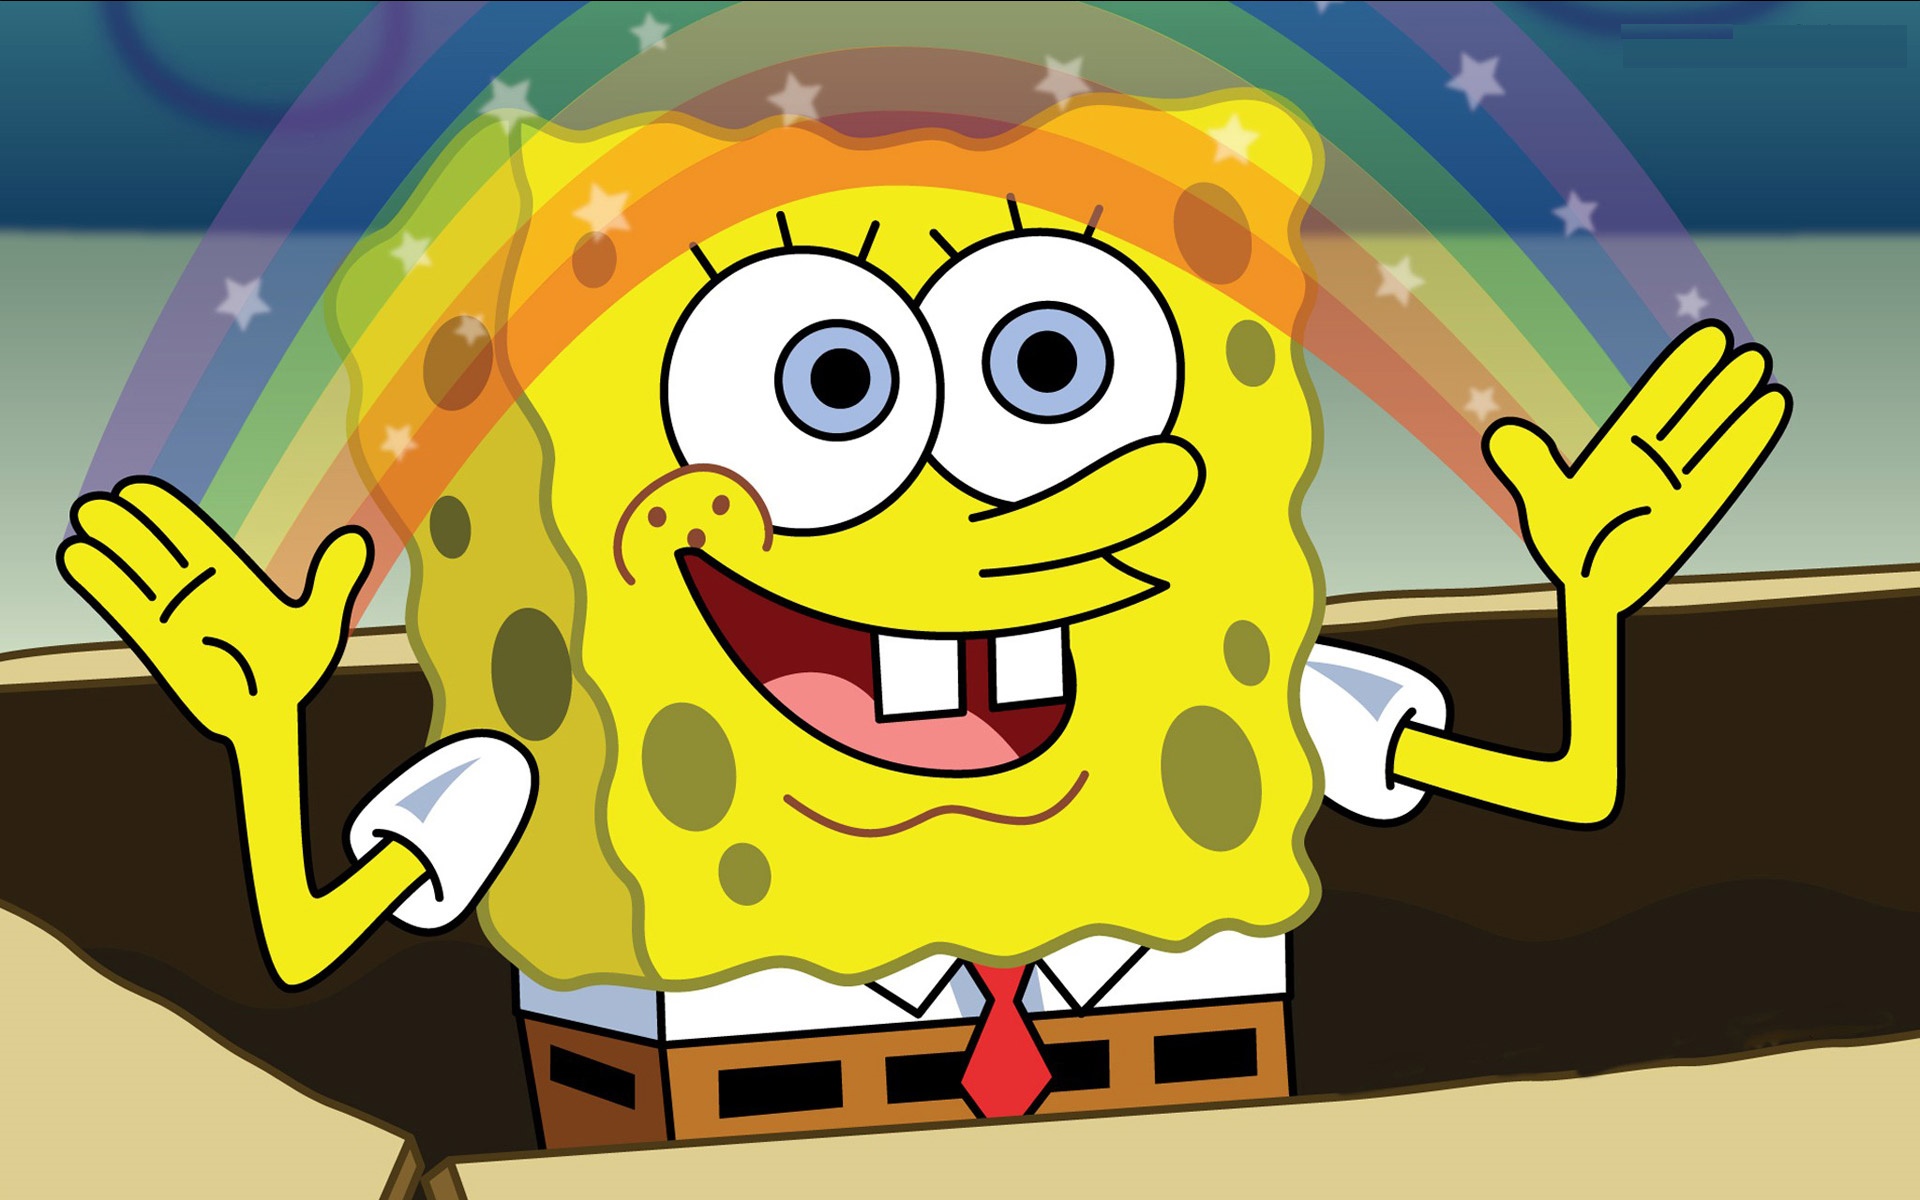 spongebob fond d'écran hd,dessin animé,jaune,dessin animé,illustration,animation